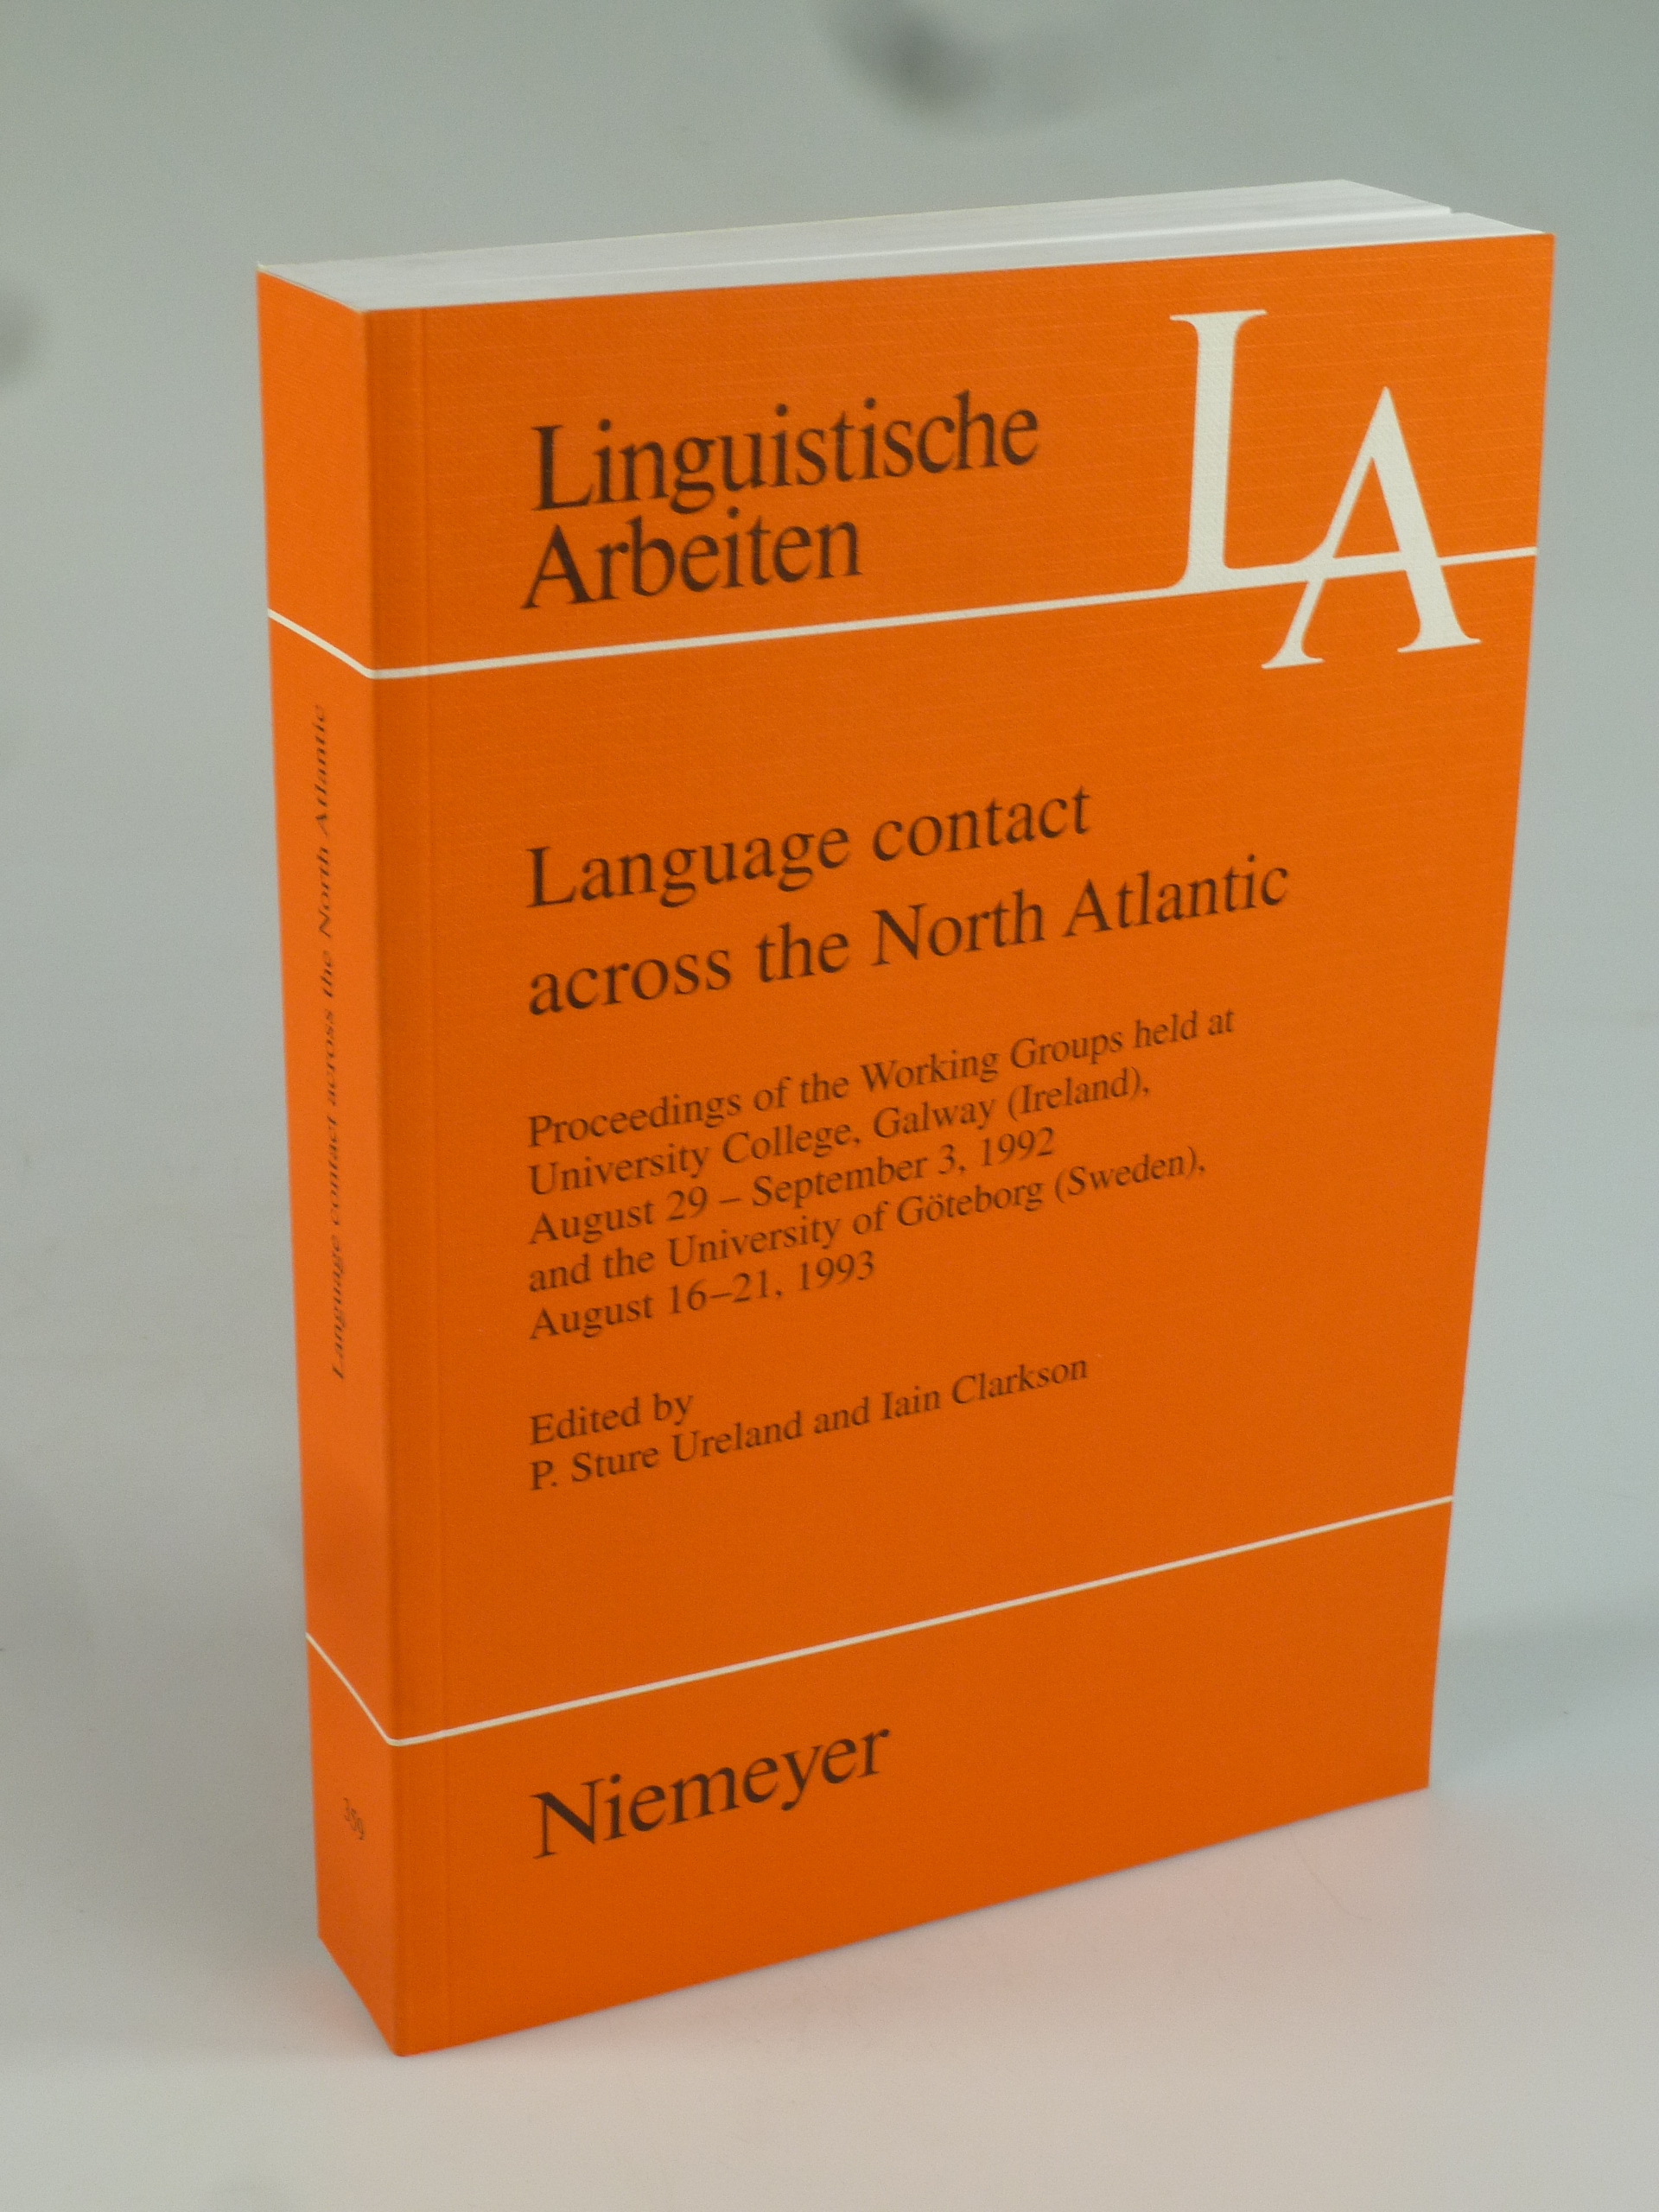 Language contact across the North Atlantic. - URELAND, P. STURE U. IAIN CLARKSON (EDIT.).